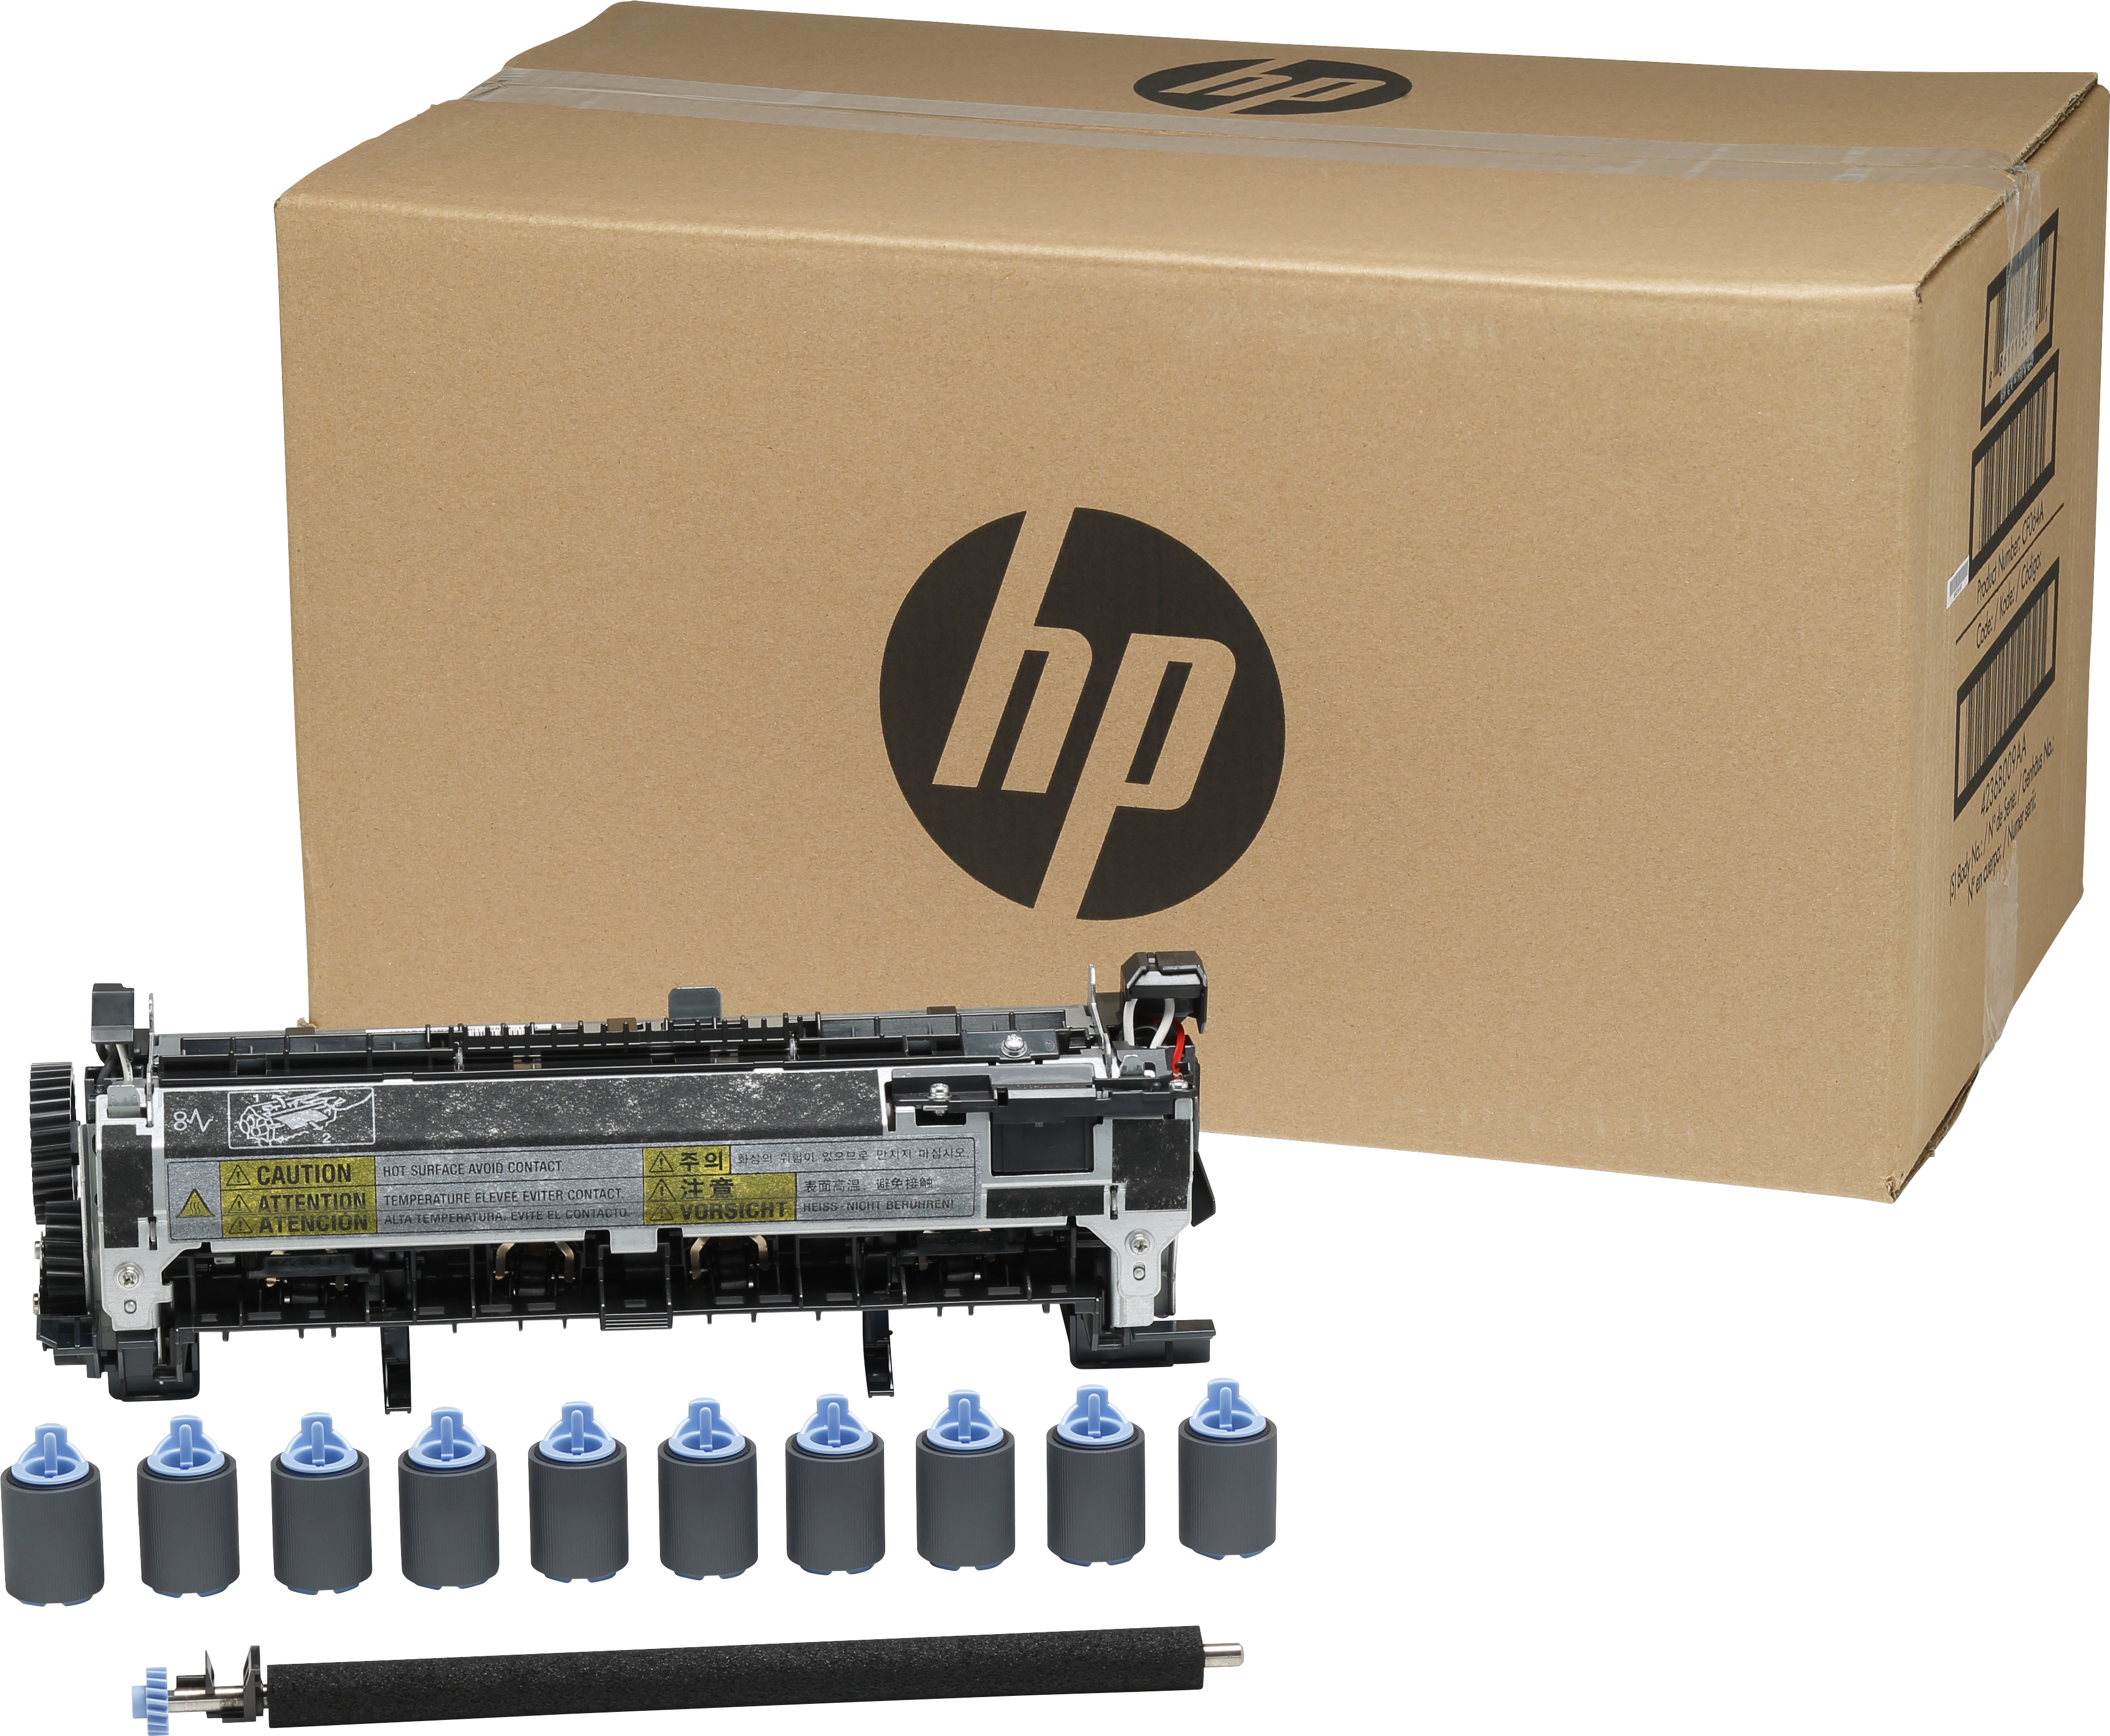 HP LaserJet CF065A Wartungskit (220 V) - Wartungs-Set - Laser - 225000 Seiten - HP - HP LaserJet Enterprise 600 M601 - M602 - M603 - Business